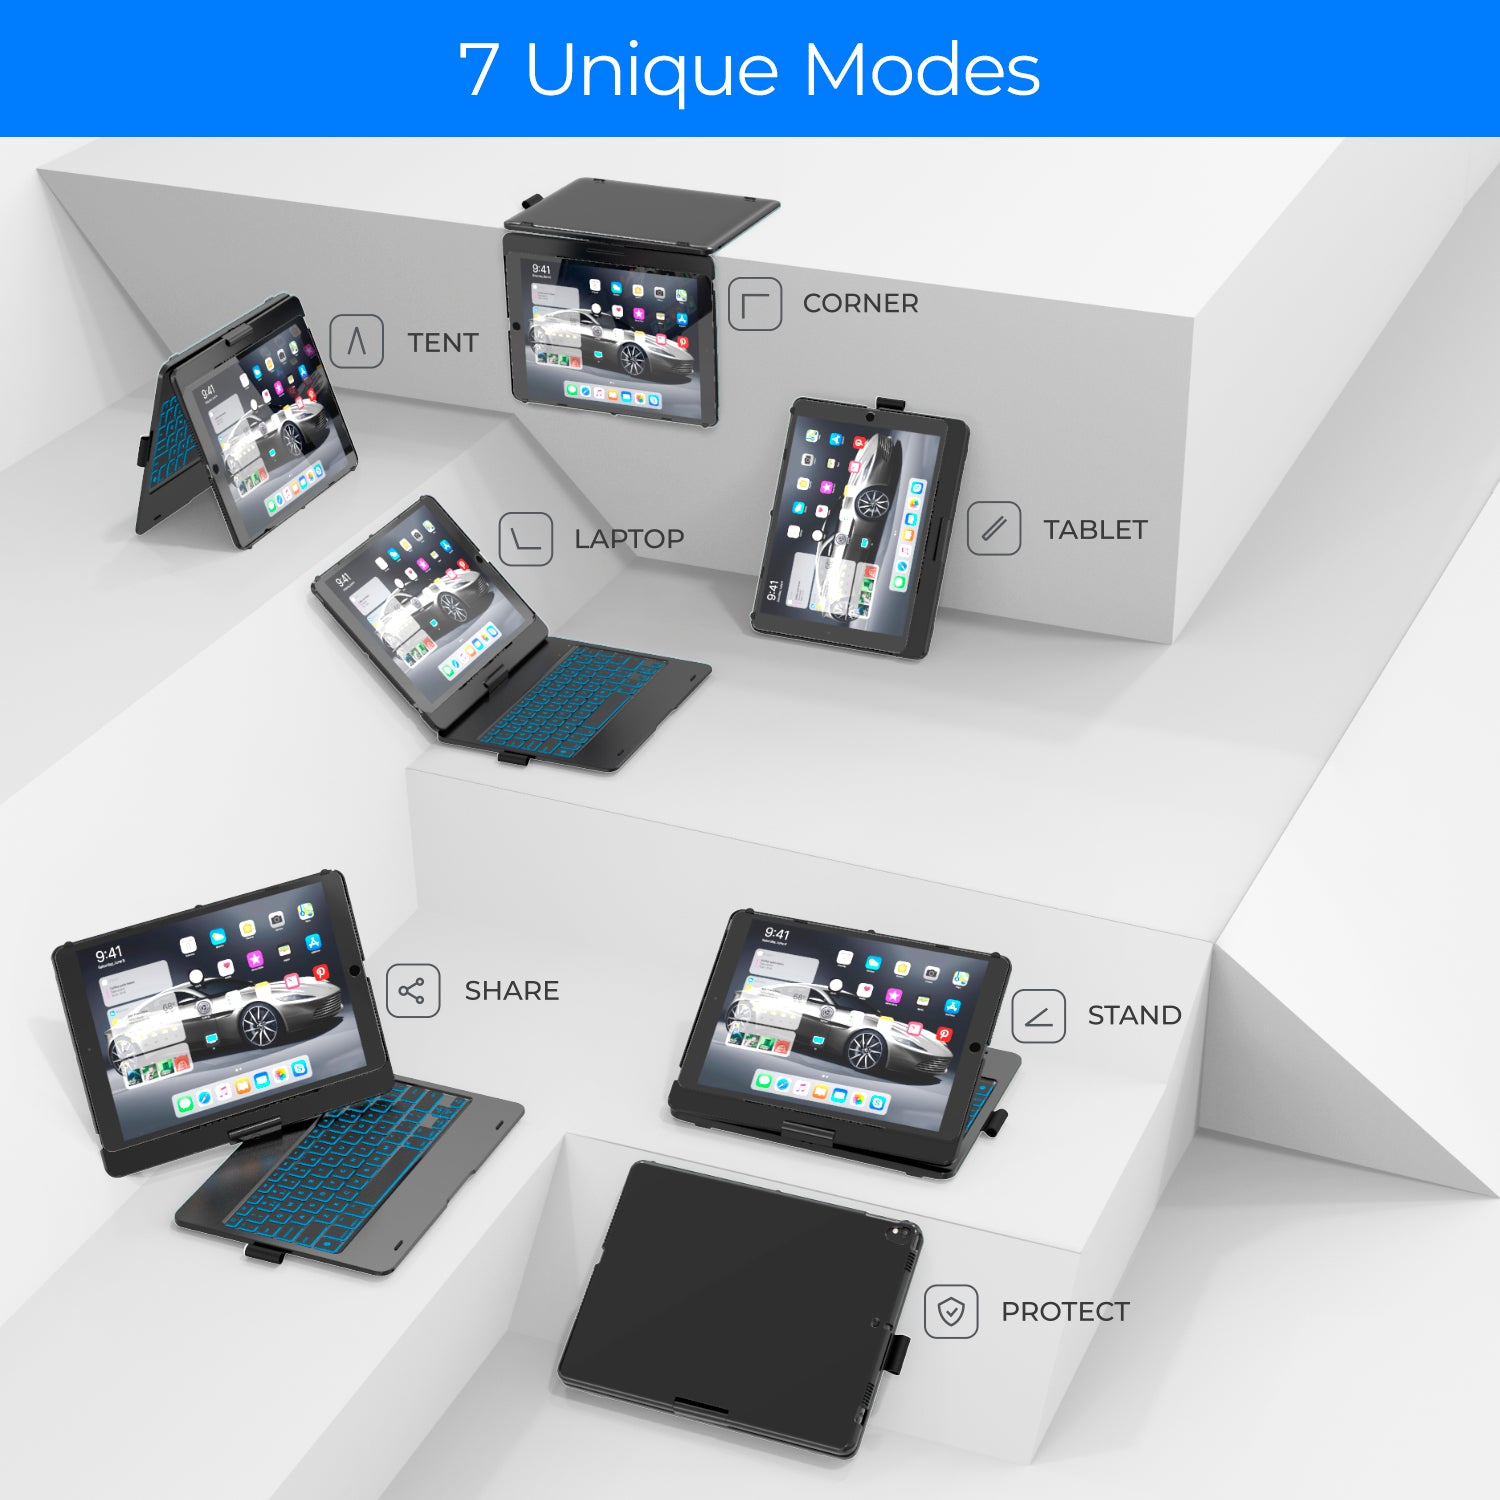 Typecase Flexbook - iPad Keyboard Case for iPad 7th Generation